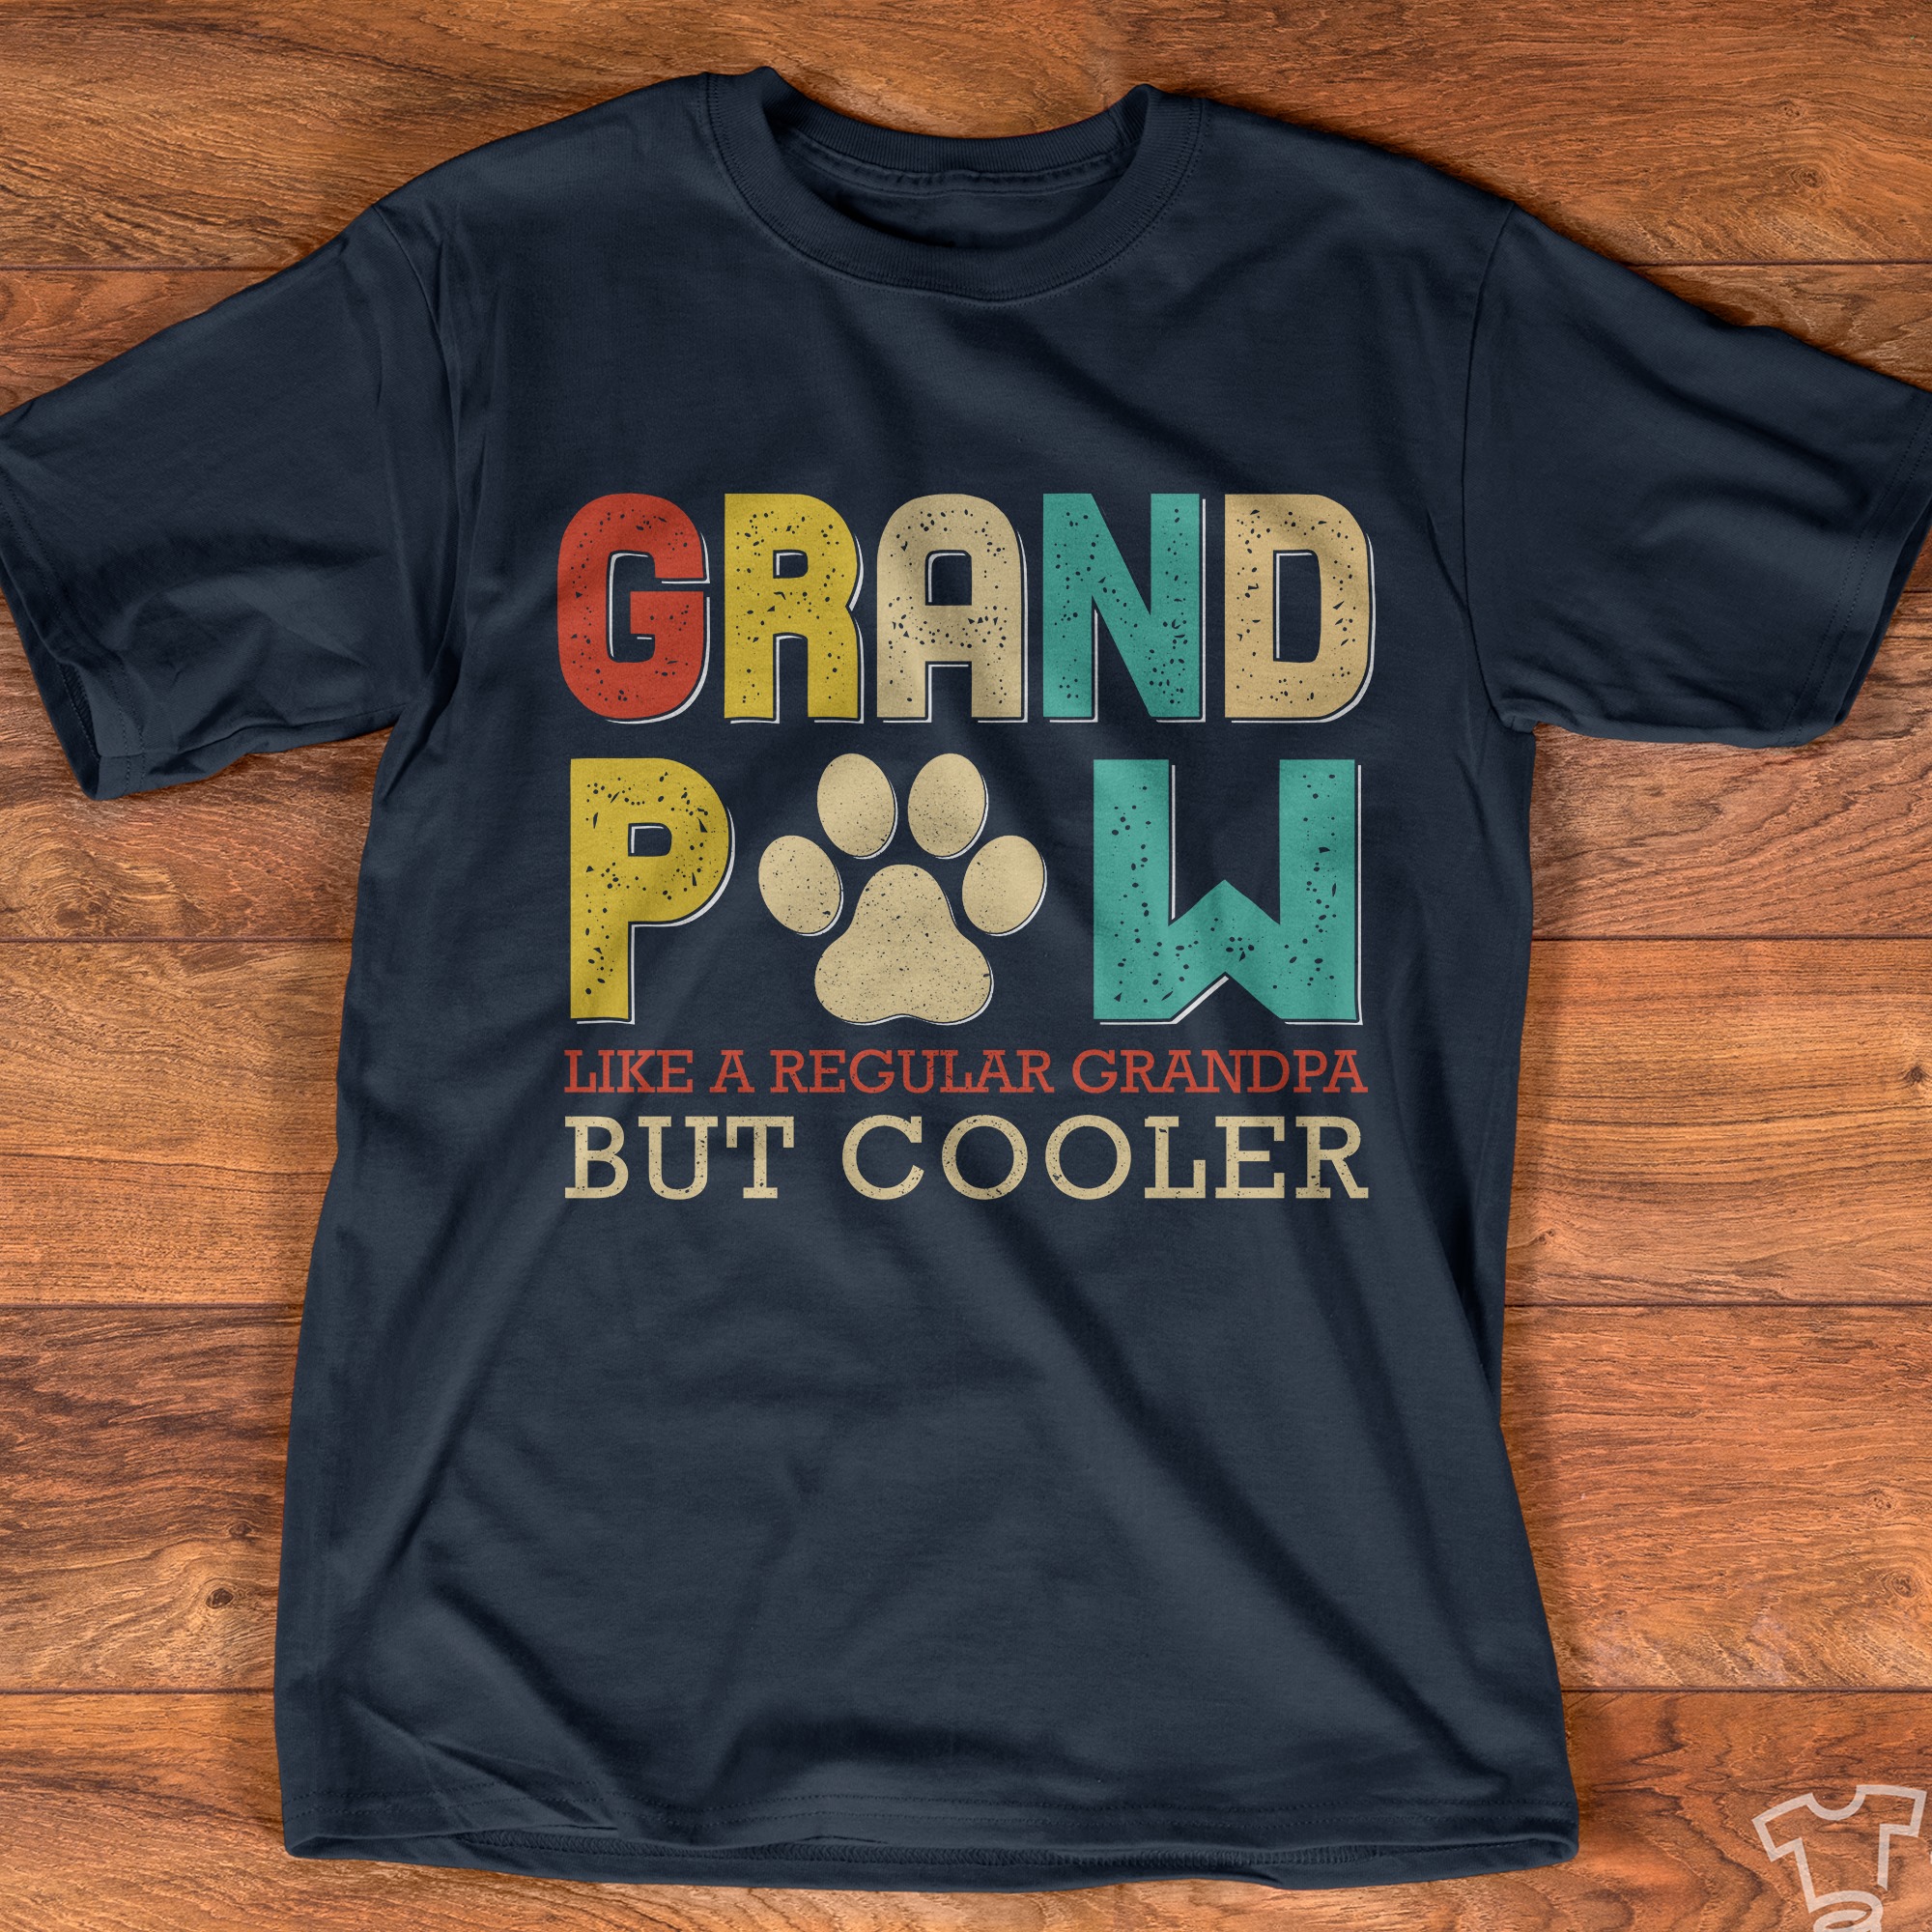 Grandpow like a regular grandpa but cooler - Cat lover